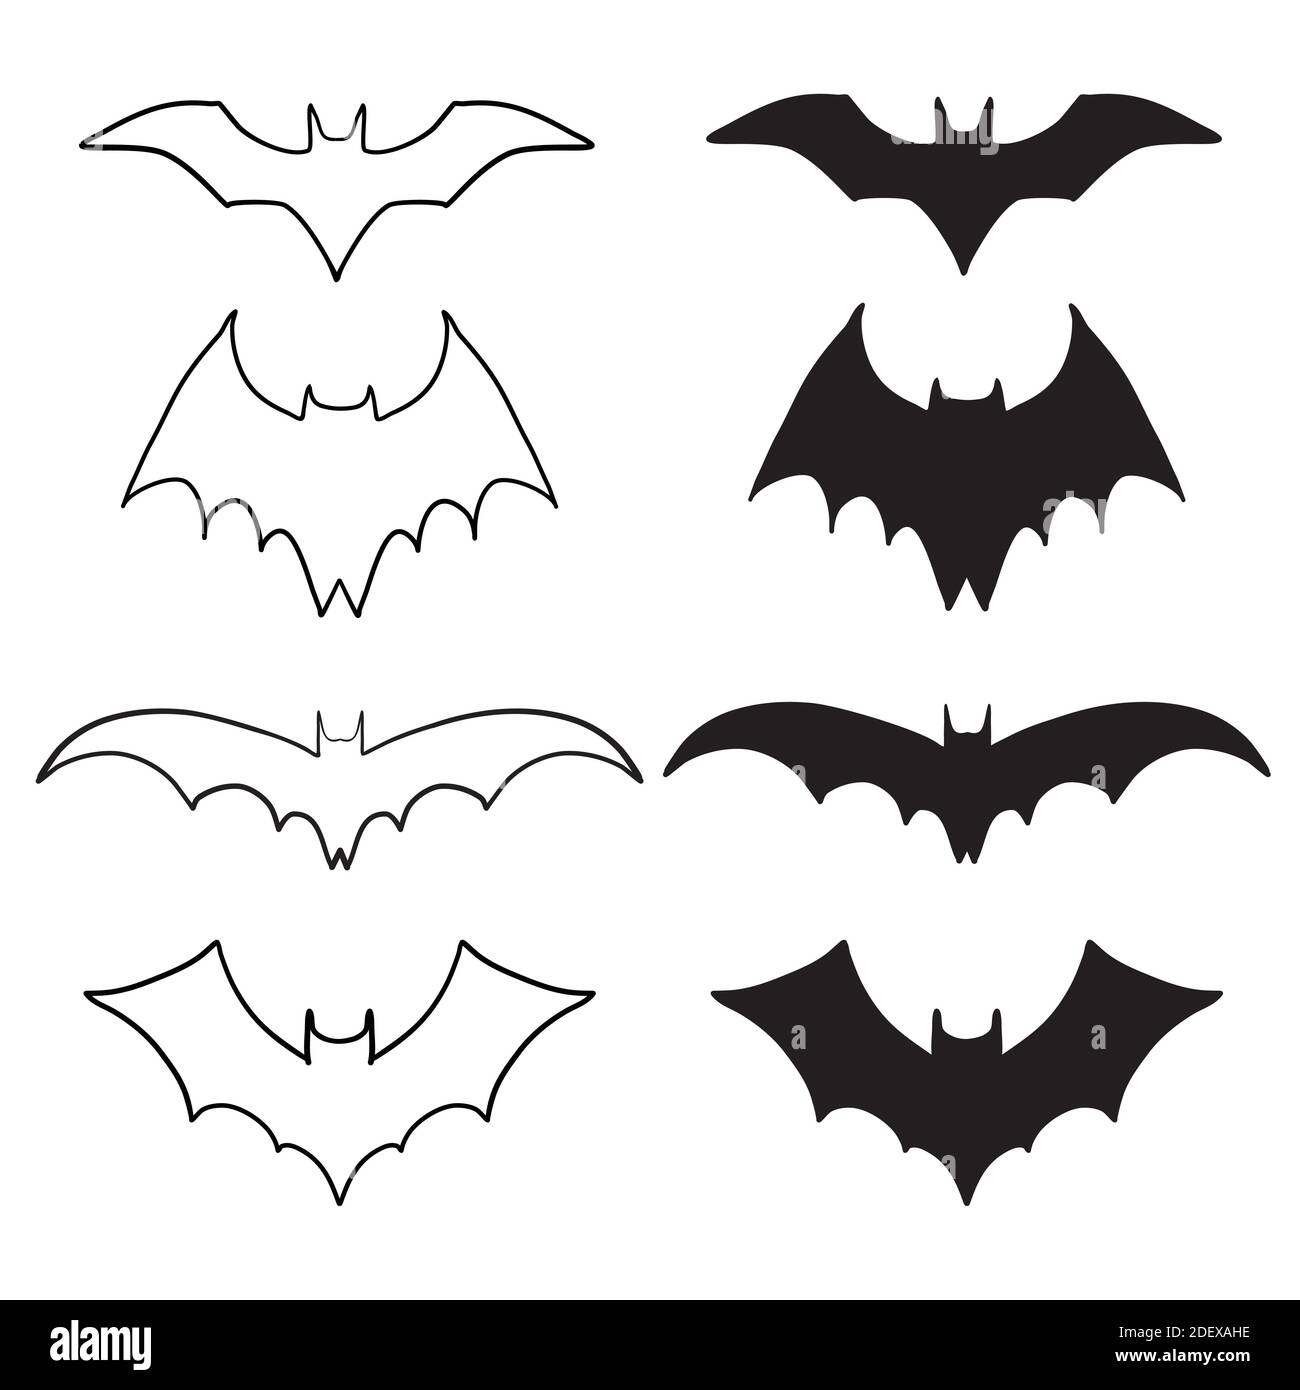 2665 Vampire Bat Tattoo Images Stock Photos  Vectors  Shutterstock